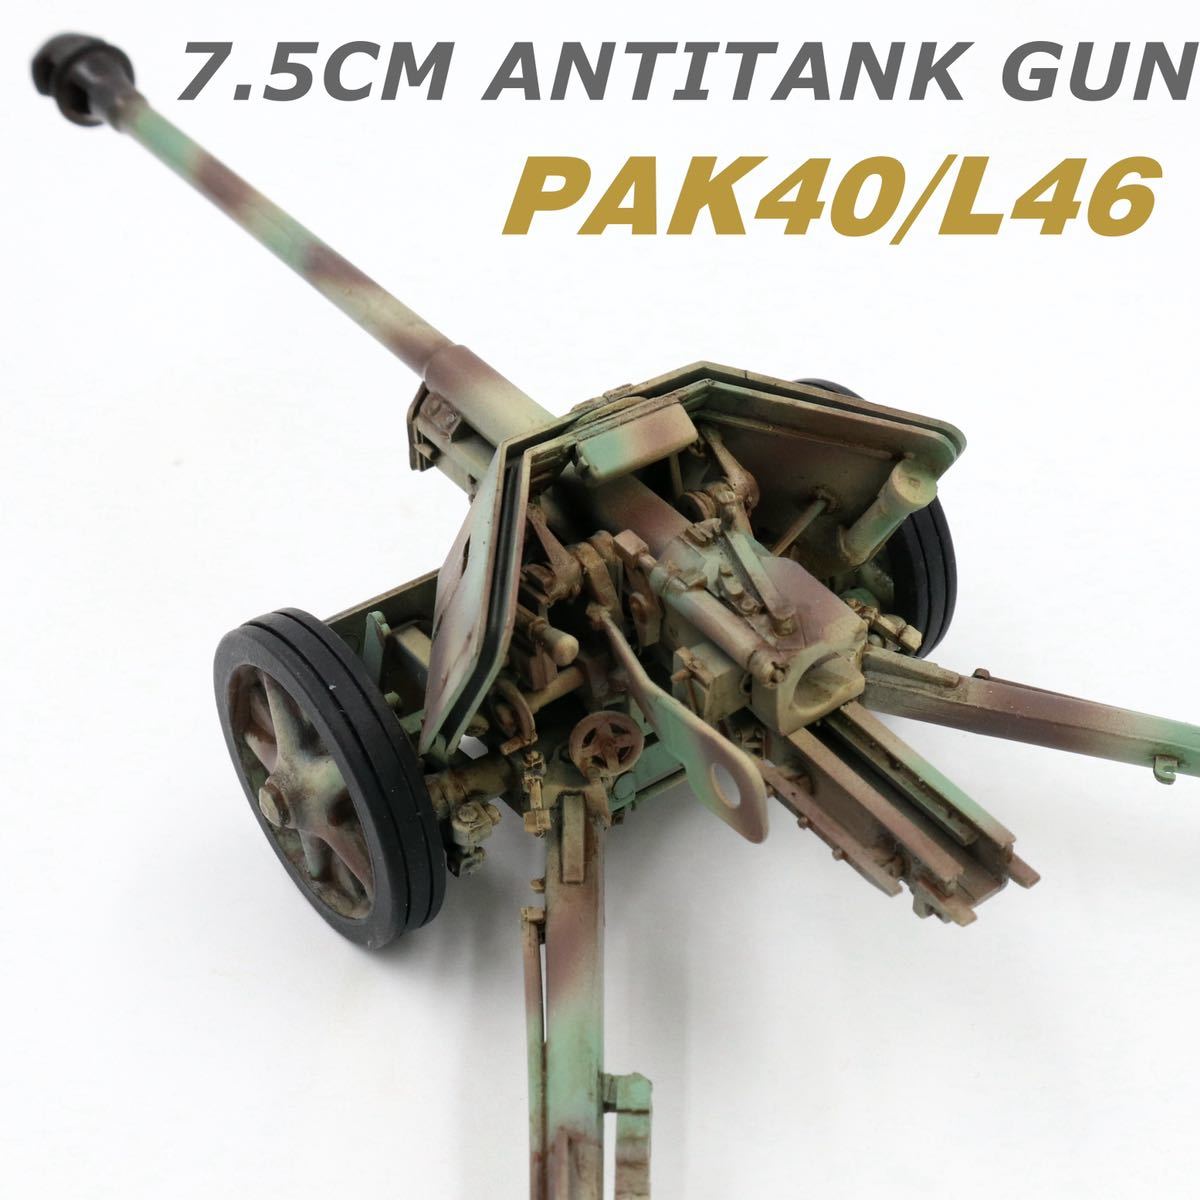 RB Model 35B48 1/35 Barrel 7.5cm PaK 40 L/46 for AT Gun 